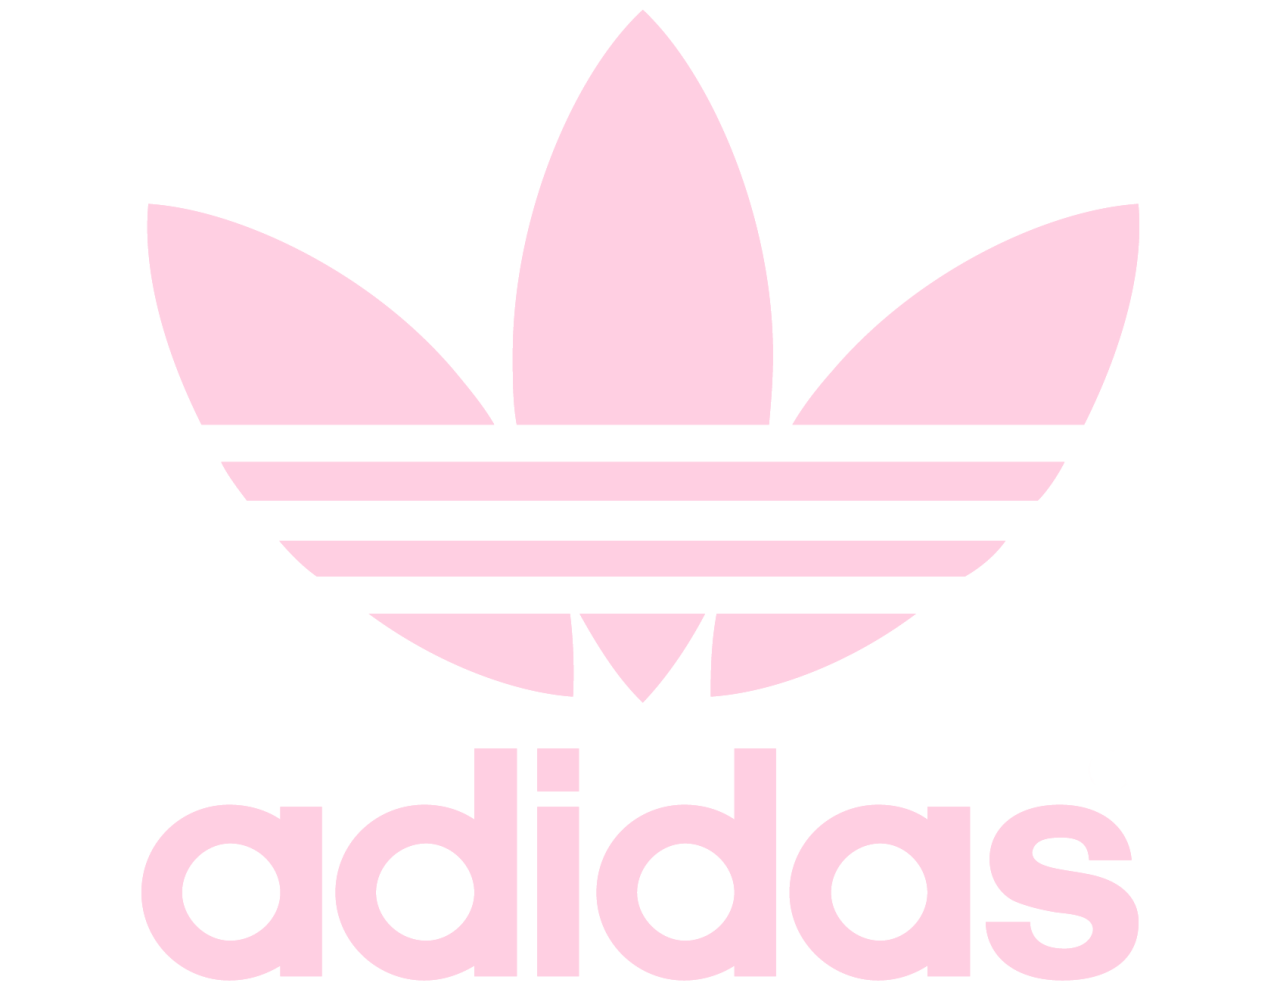 Clothing Superstar Originals Adidas Shoe HQ Image Free PNG PNG Image